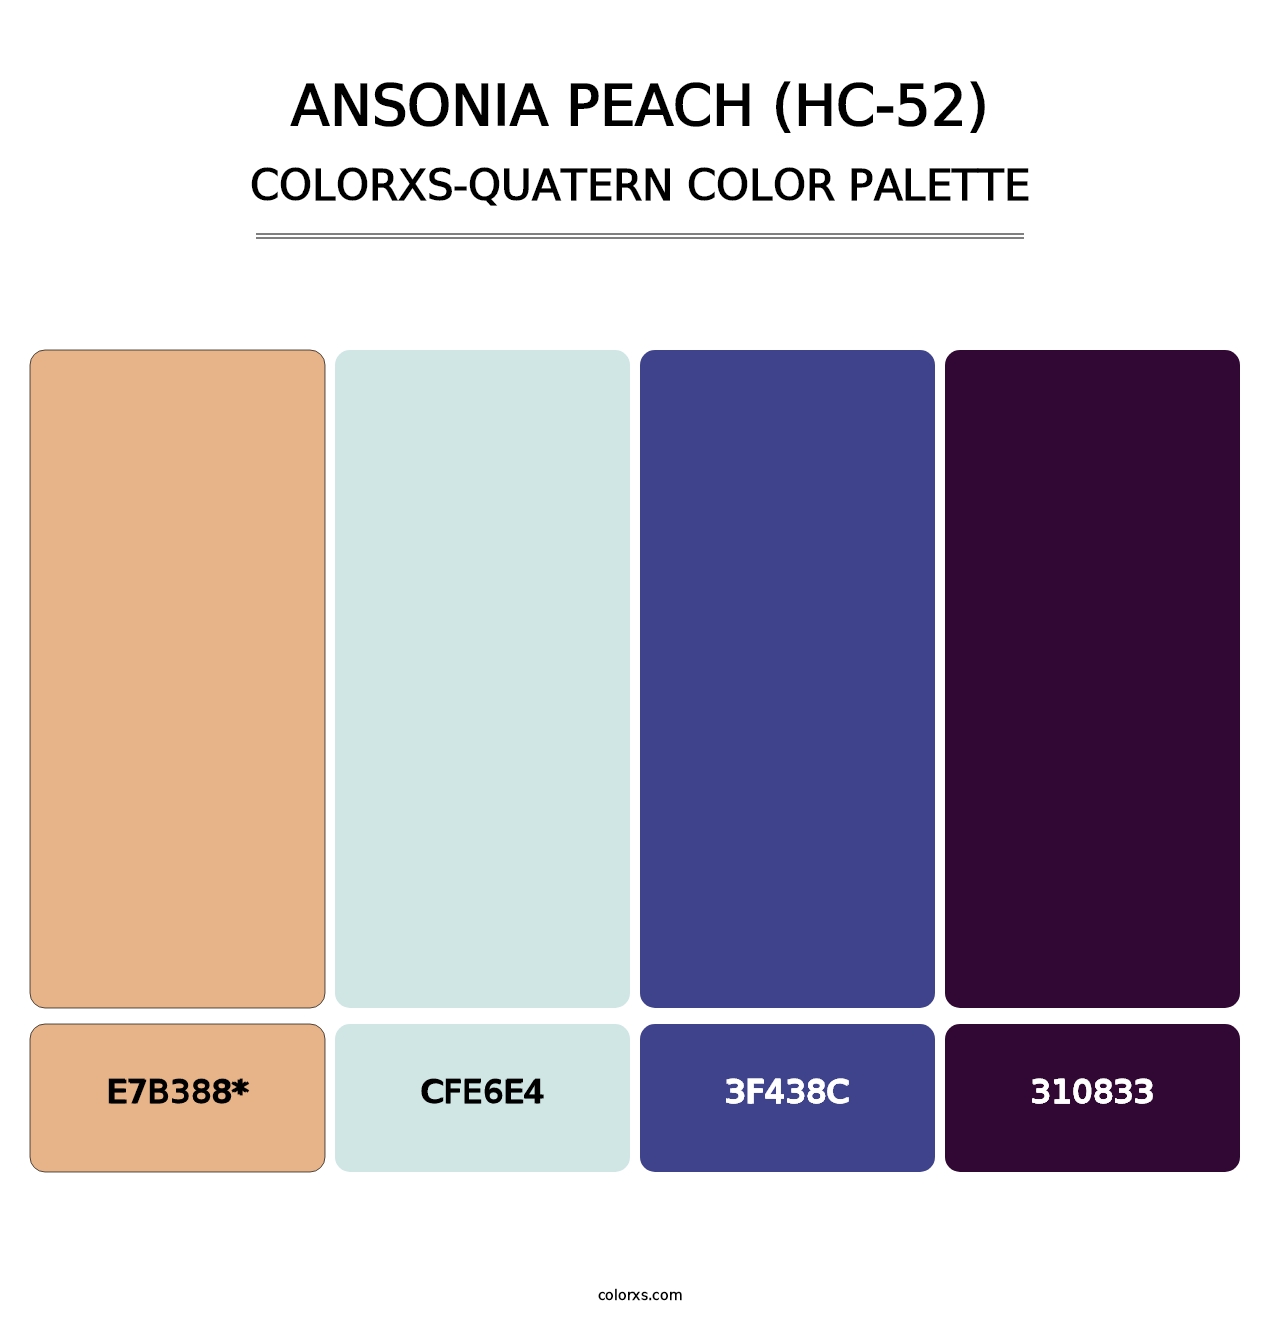 Ansonia Peach (HC-52) - Colorxs Quatern Palette